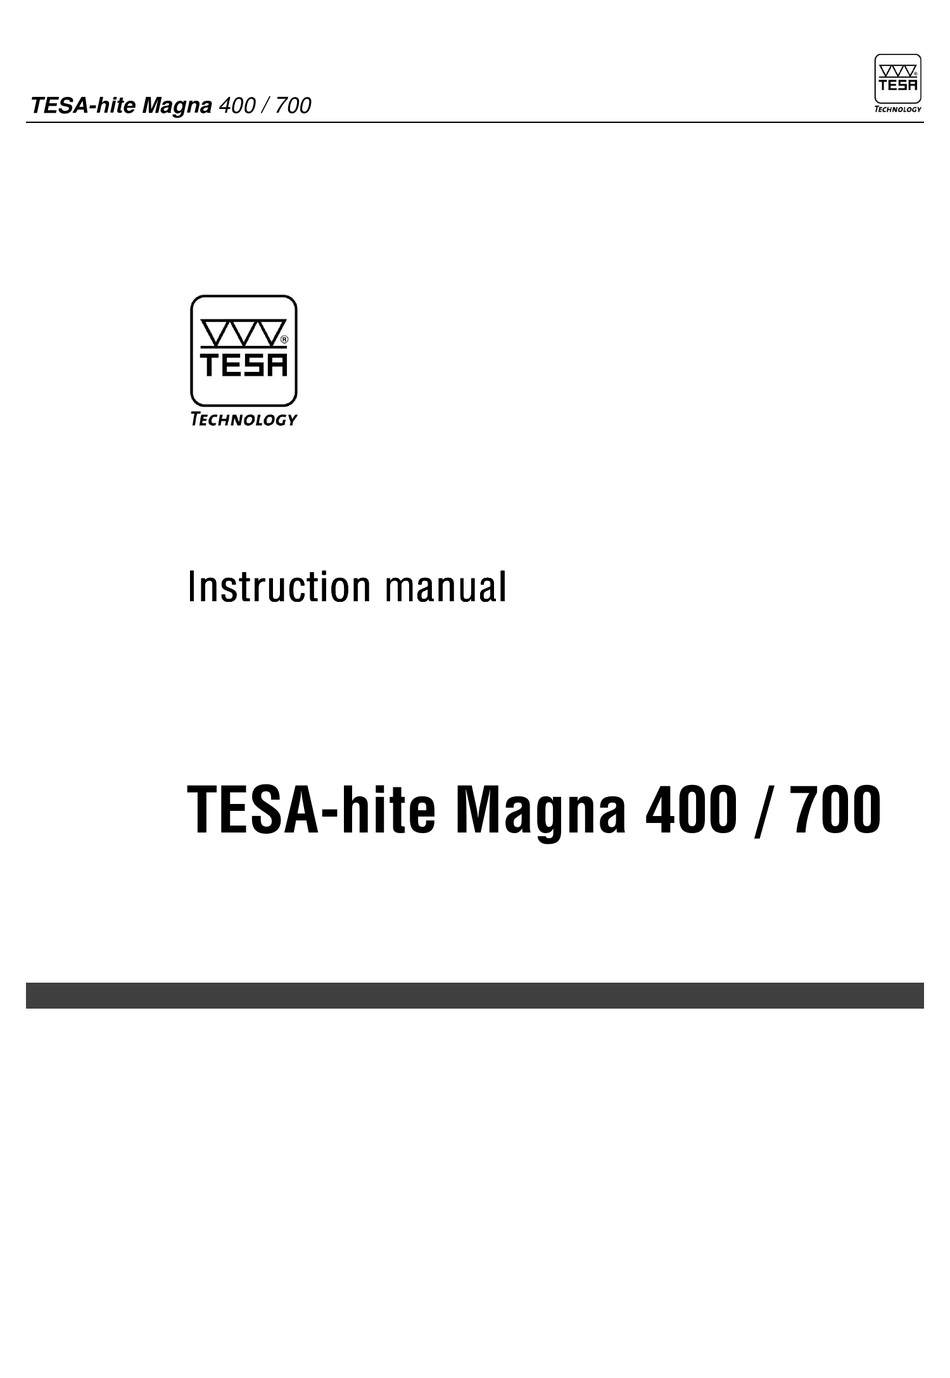 TESA -HITE MAGNA 400 INSTRUCTION MANUAL Pdf Download | ManualsLib